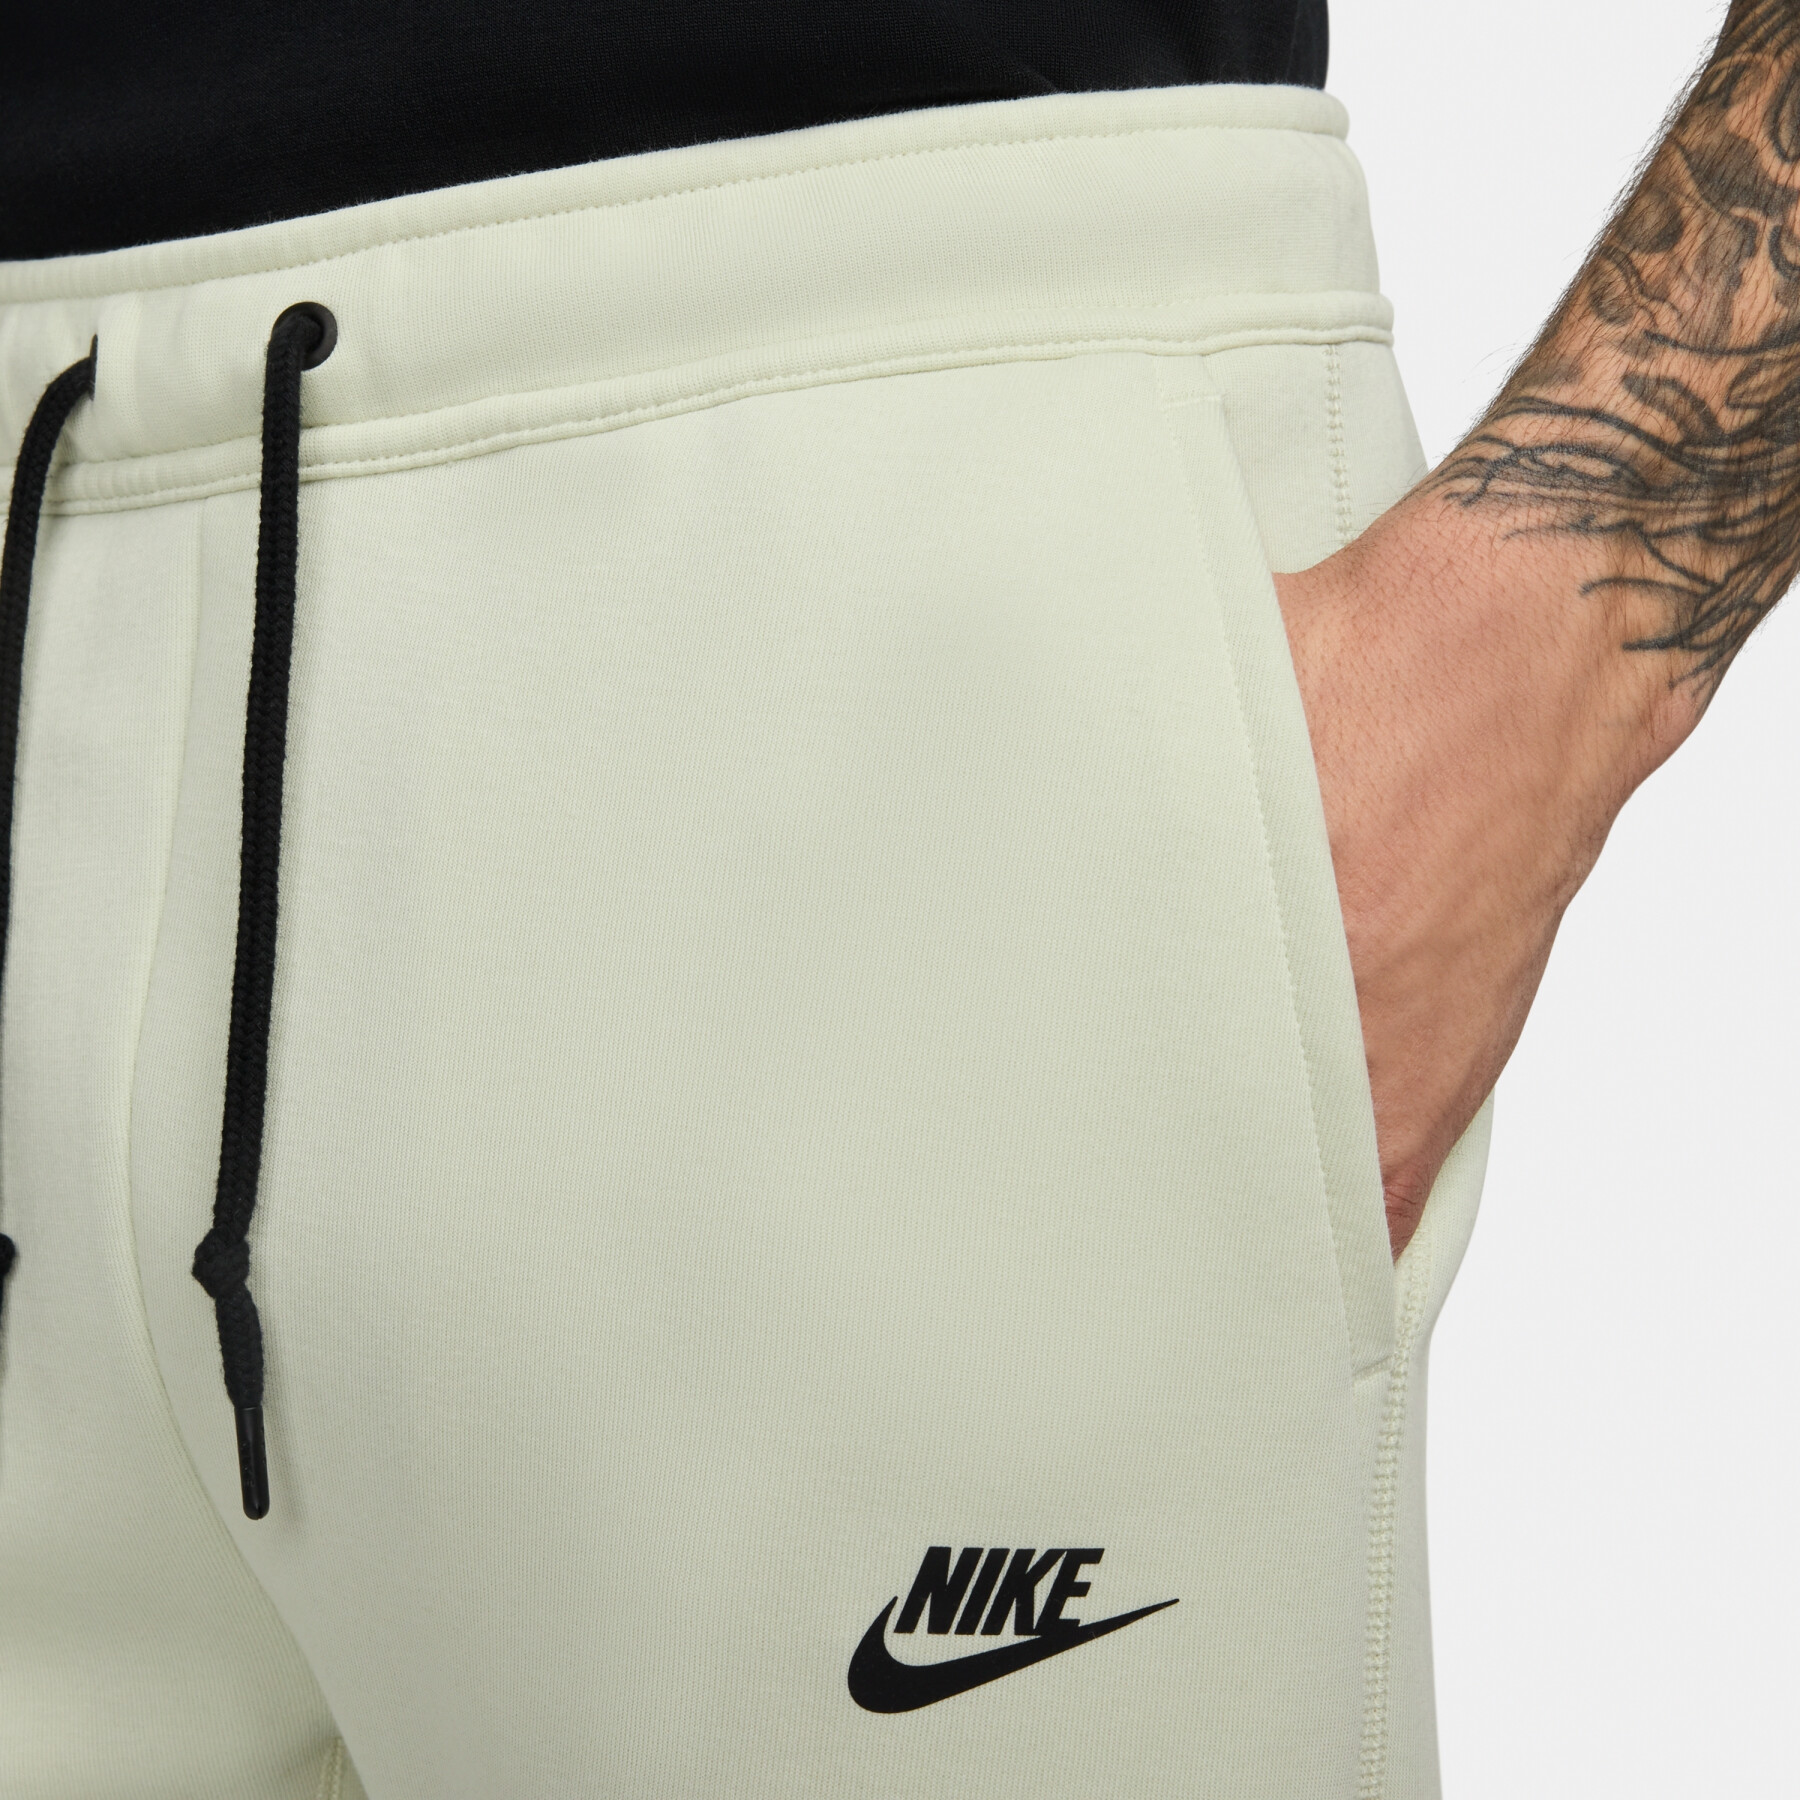 Slim-fit jogging suit Nike Tech Fleece